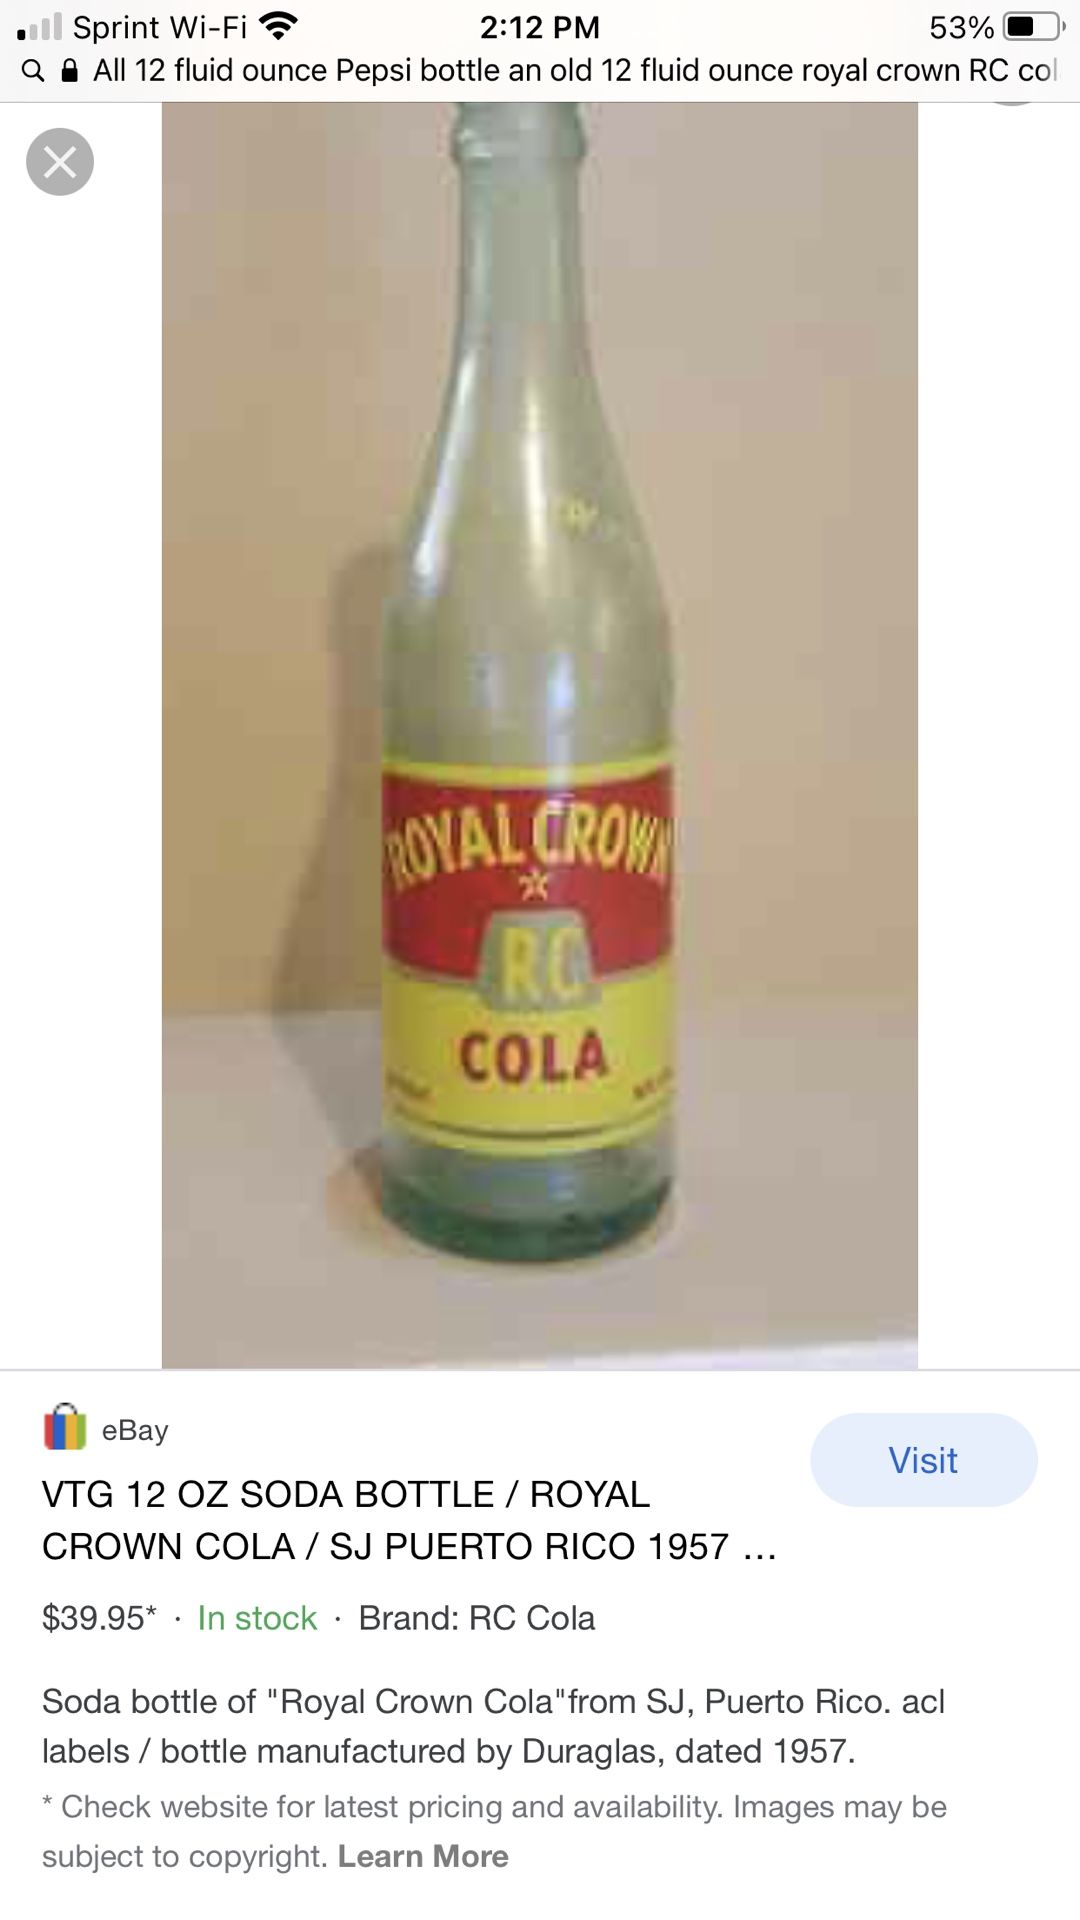 Vintage Royal Crown RC cola Bottle -$20.00